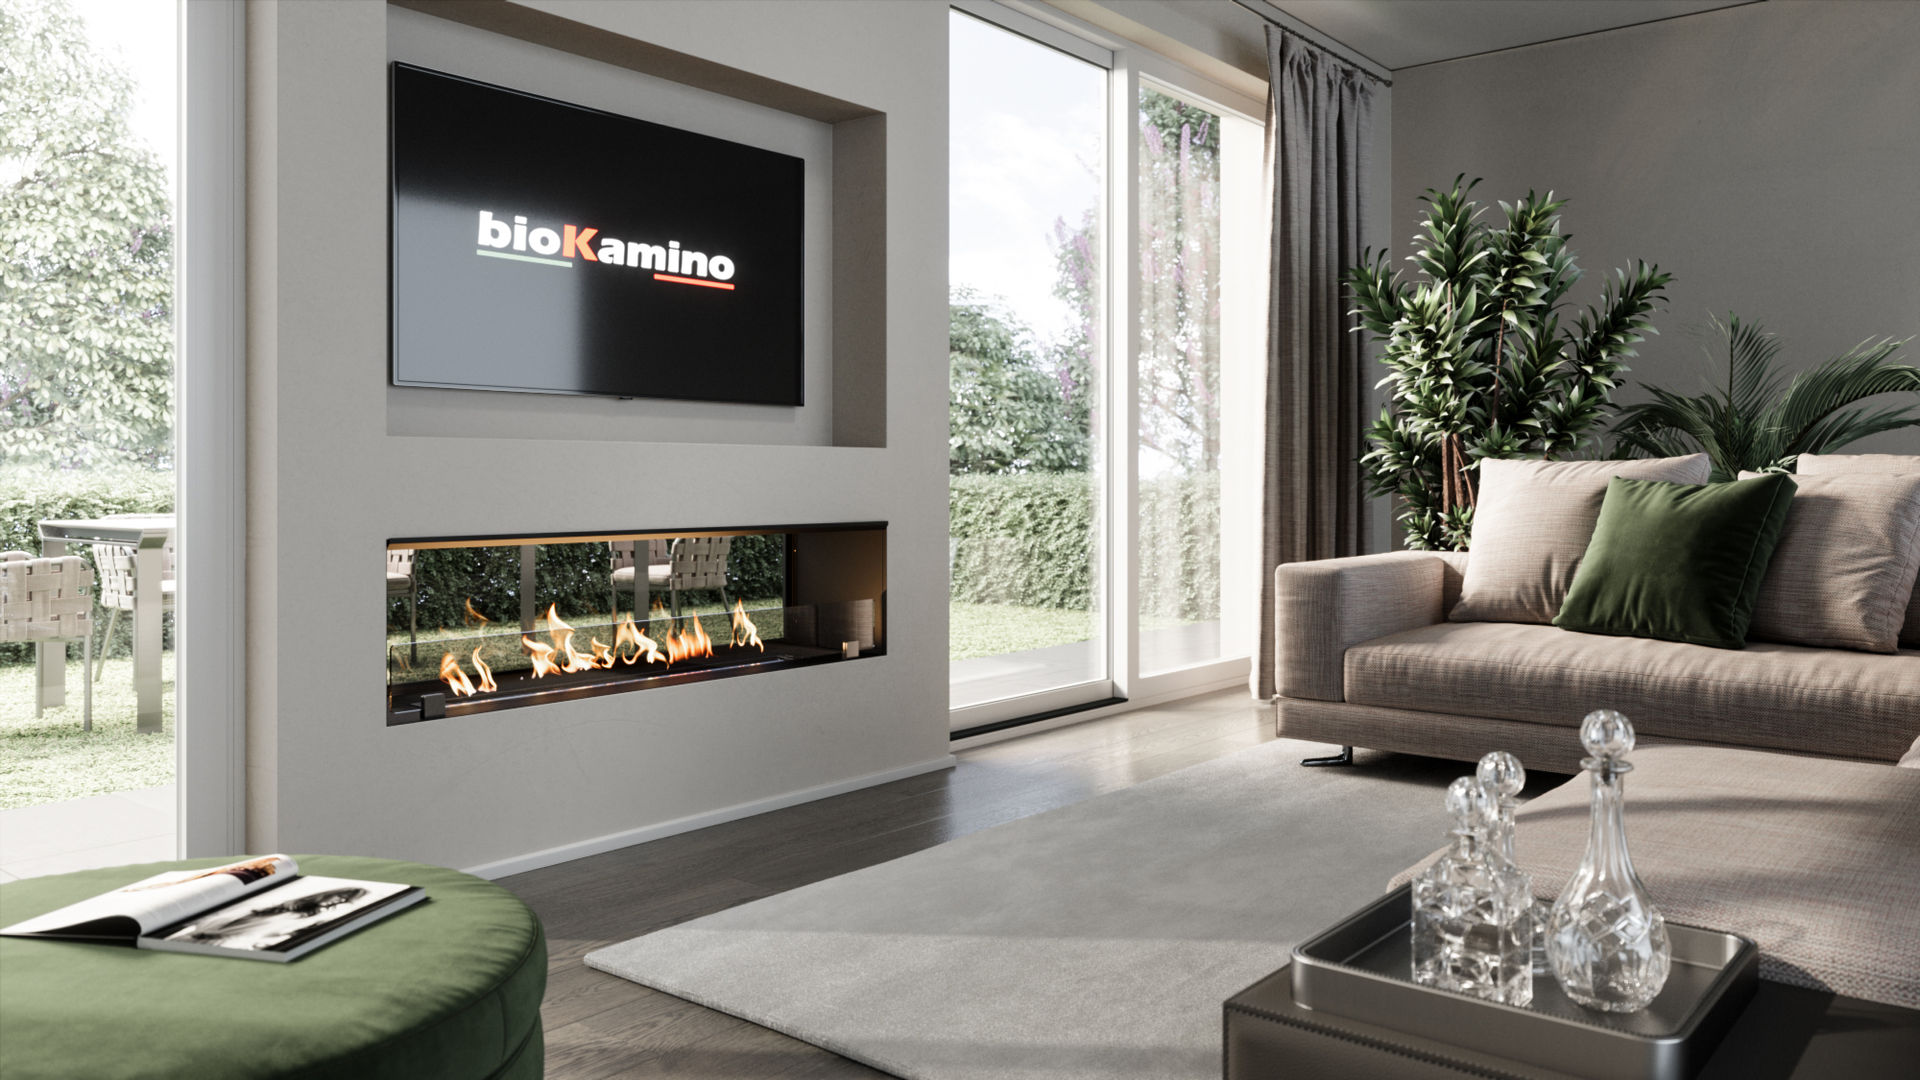 BKBF - LINEA DA INCASSO, bioKamino bioKamino Moderne huizen IJzer / Staal Accessories & decoration